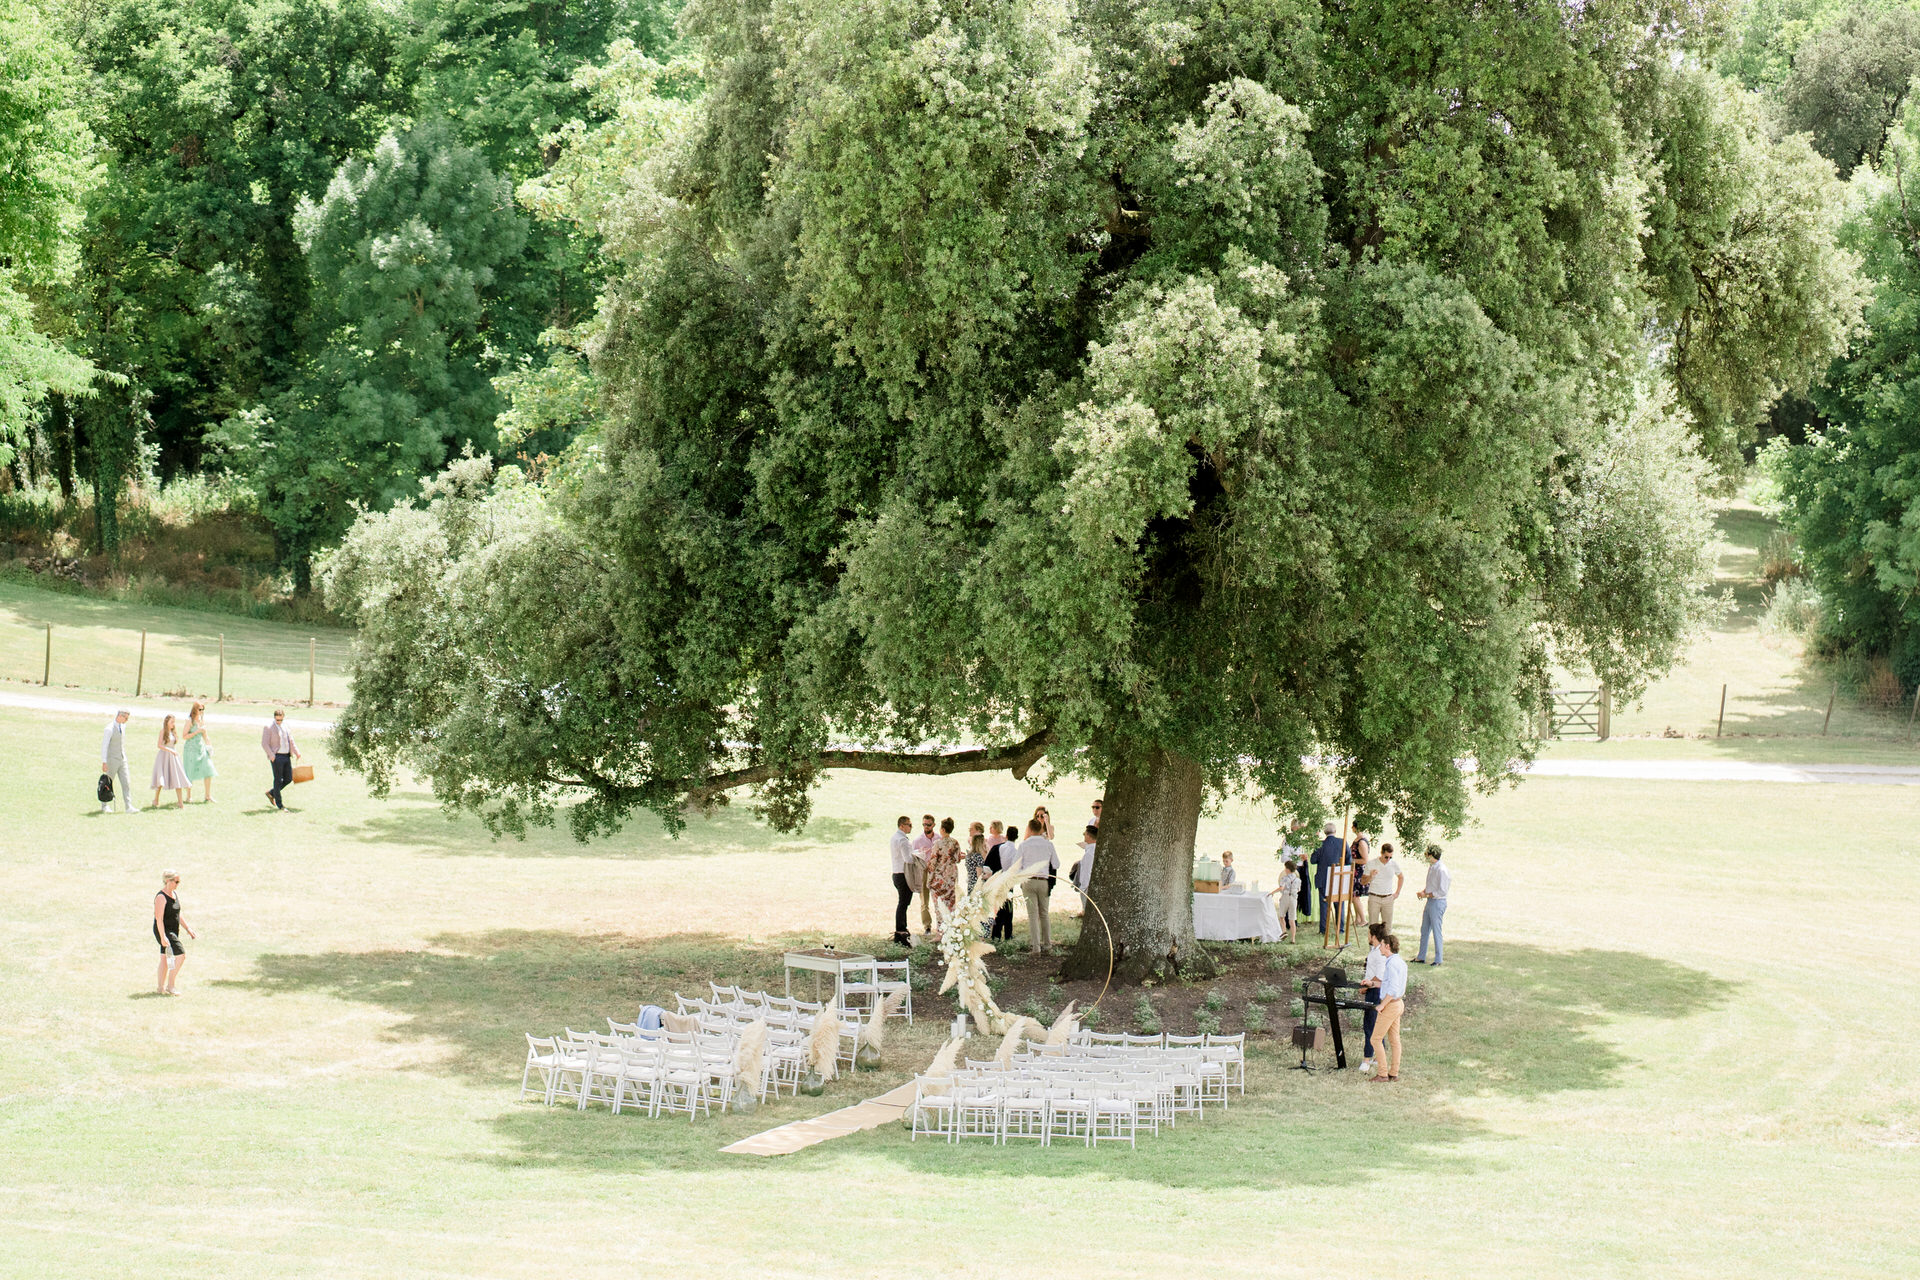 outdoor wedding ceremony setup at chateau de brives